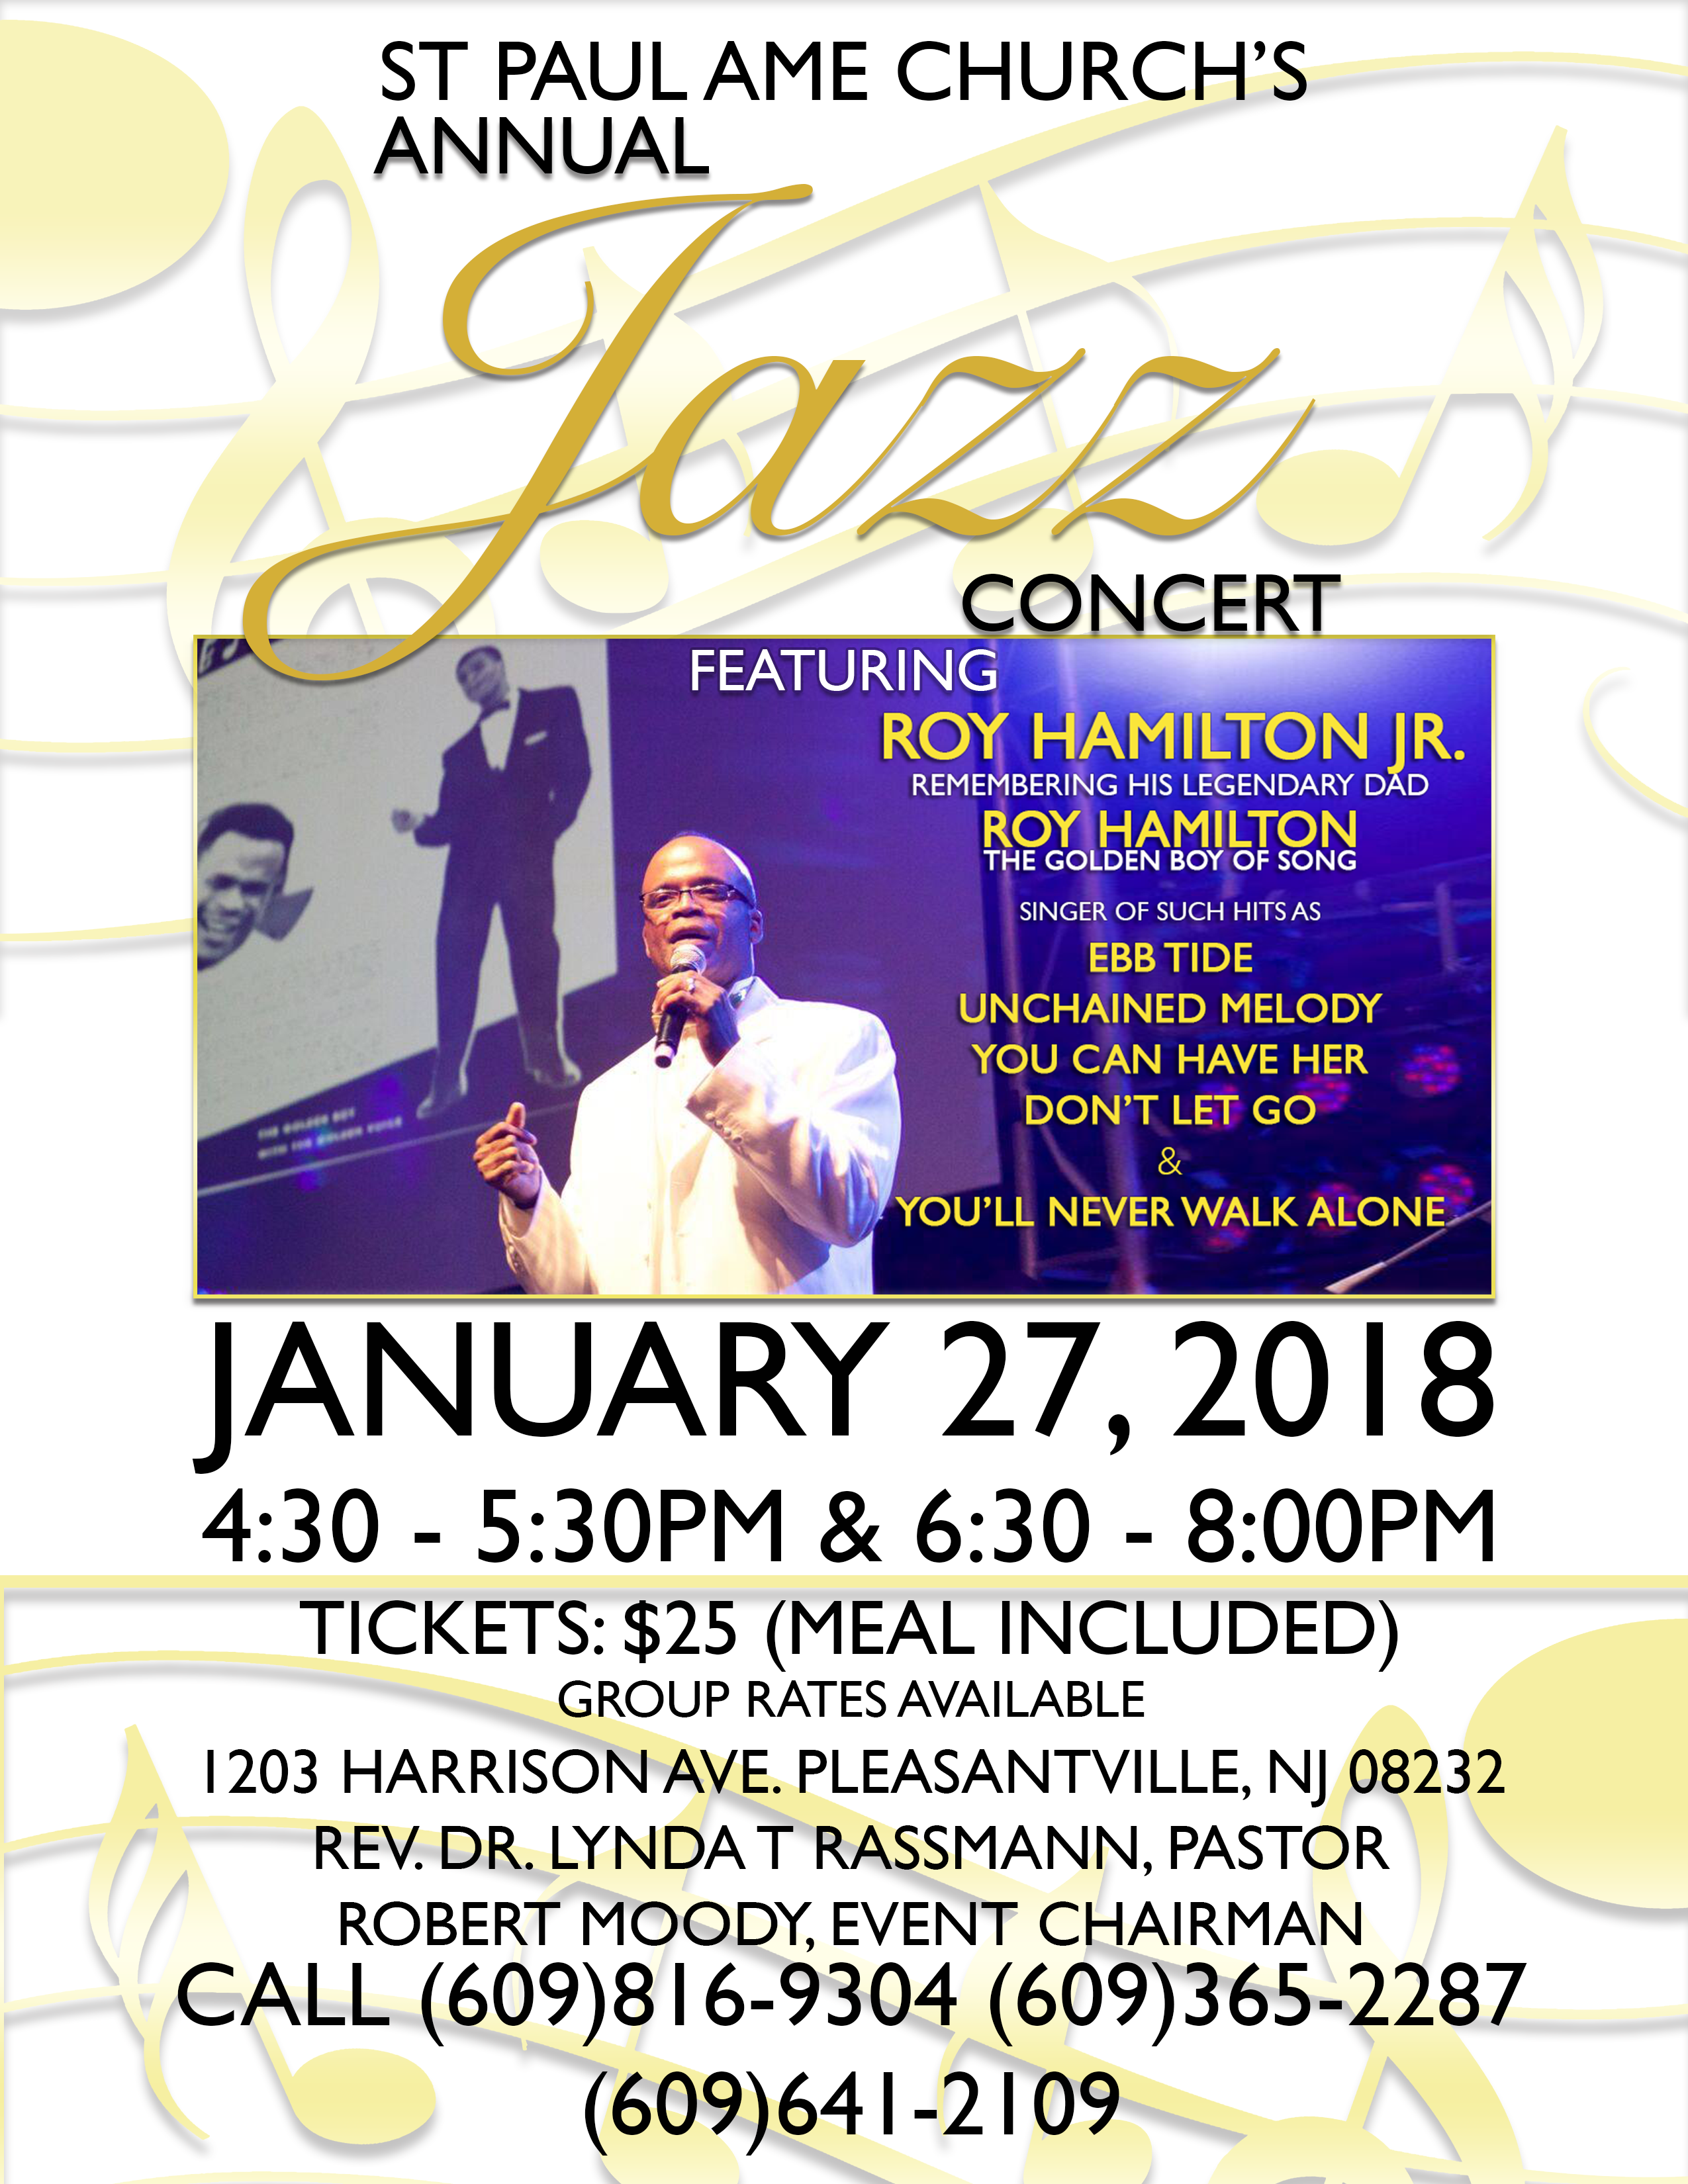 St Paul AME Church’s Annual Jazz Concert, January 27, 2018